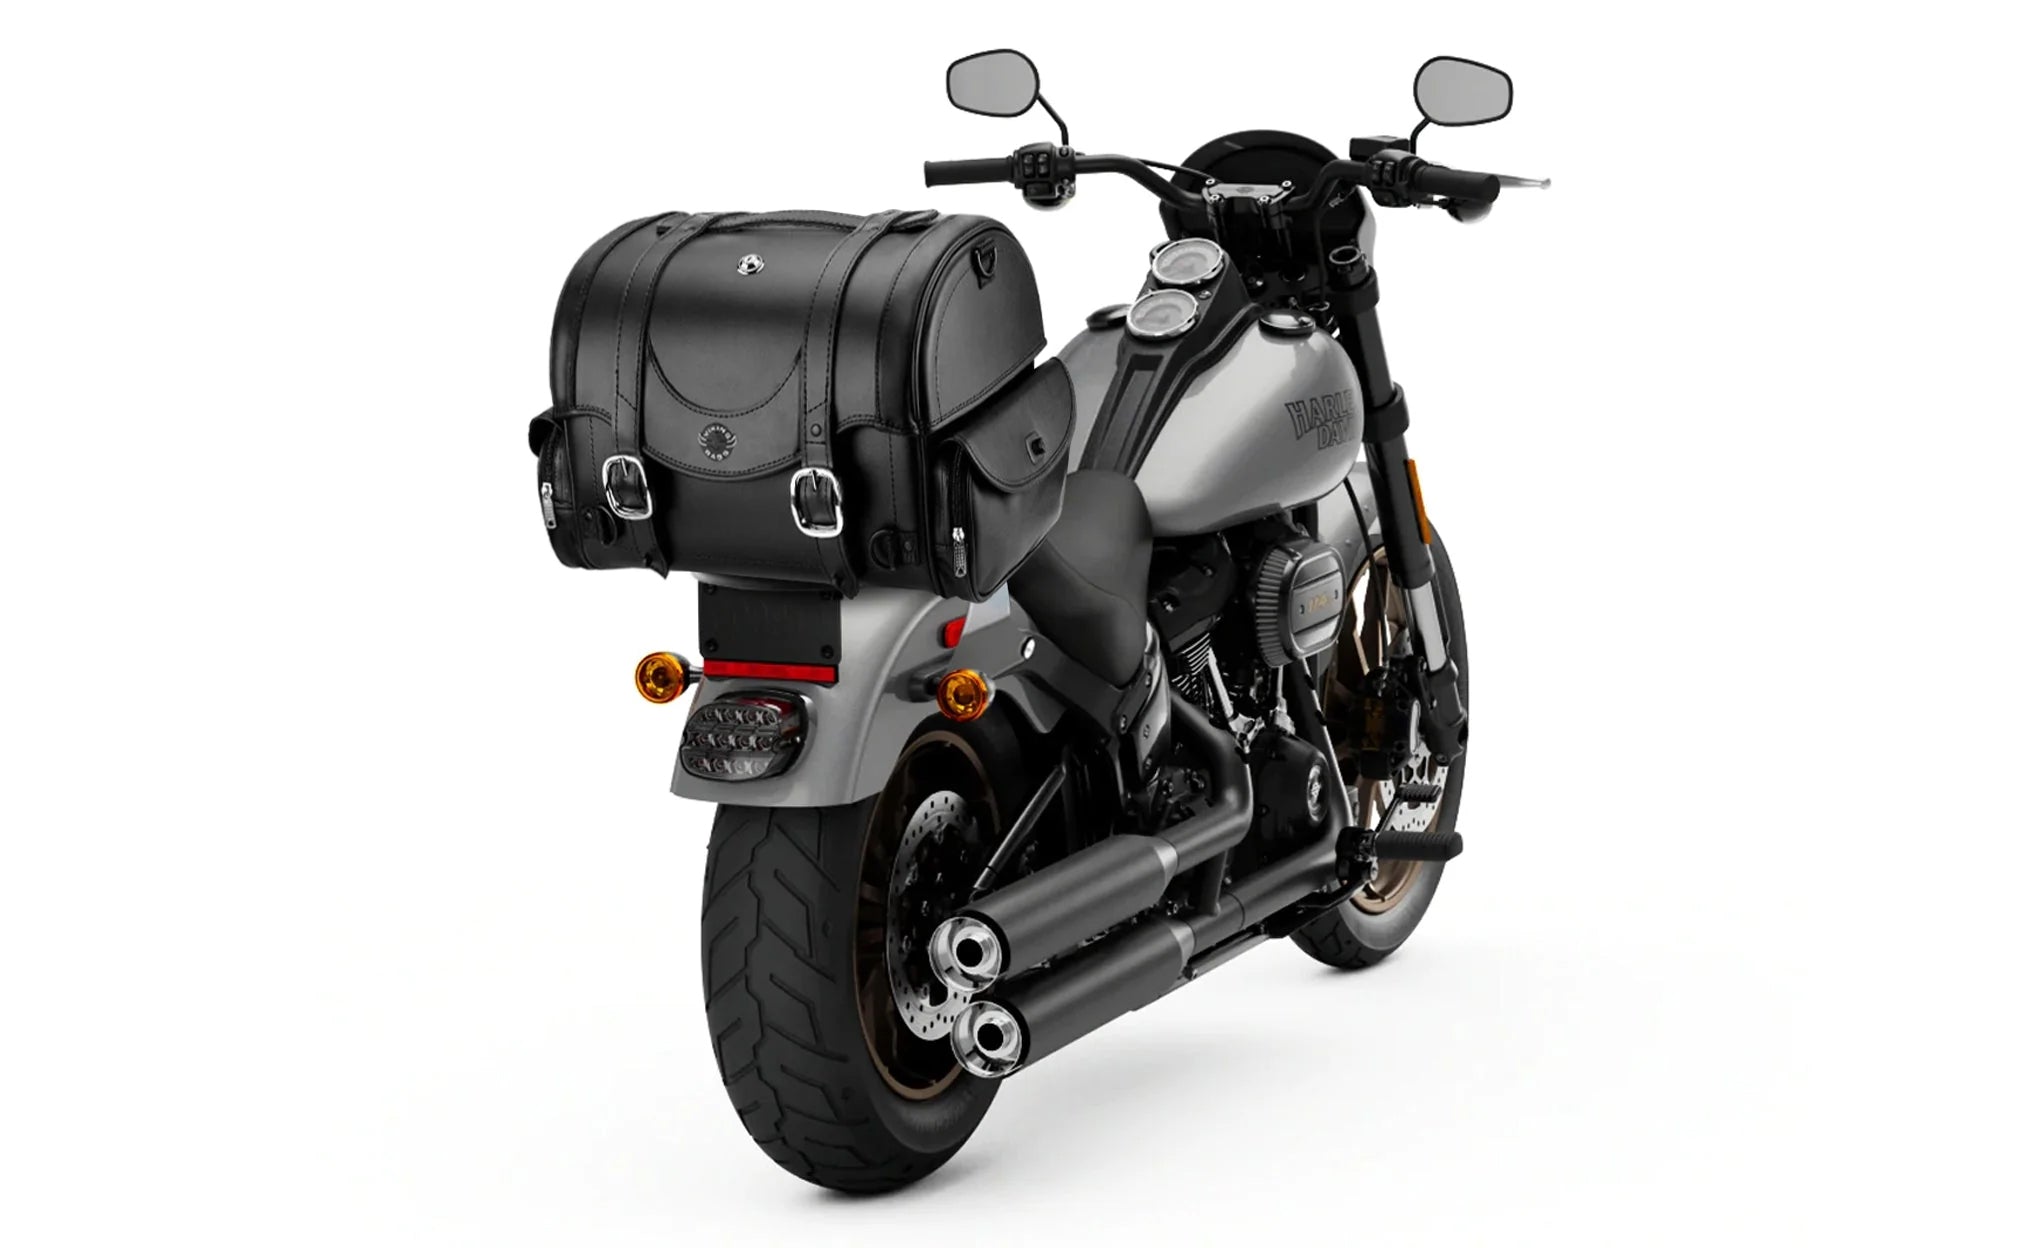 21L - Century Medium Leather Motorcycle Trunk Bag for Harley Davidson on Bike Photo @expand